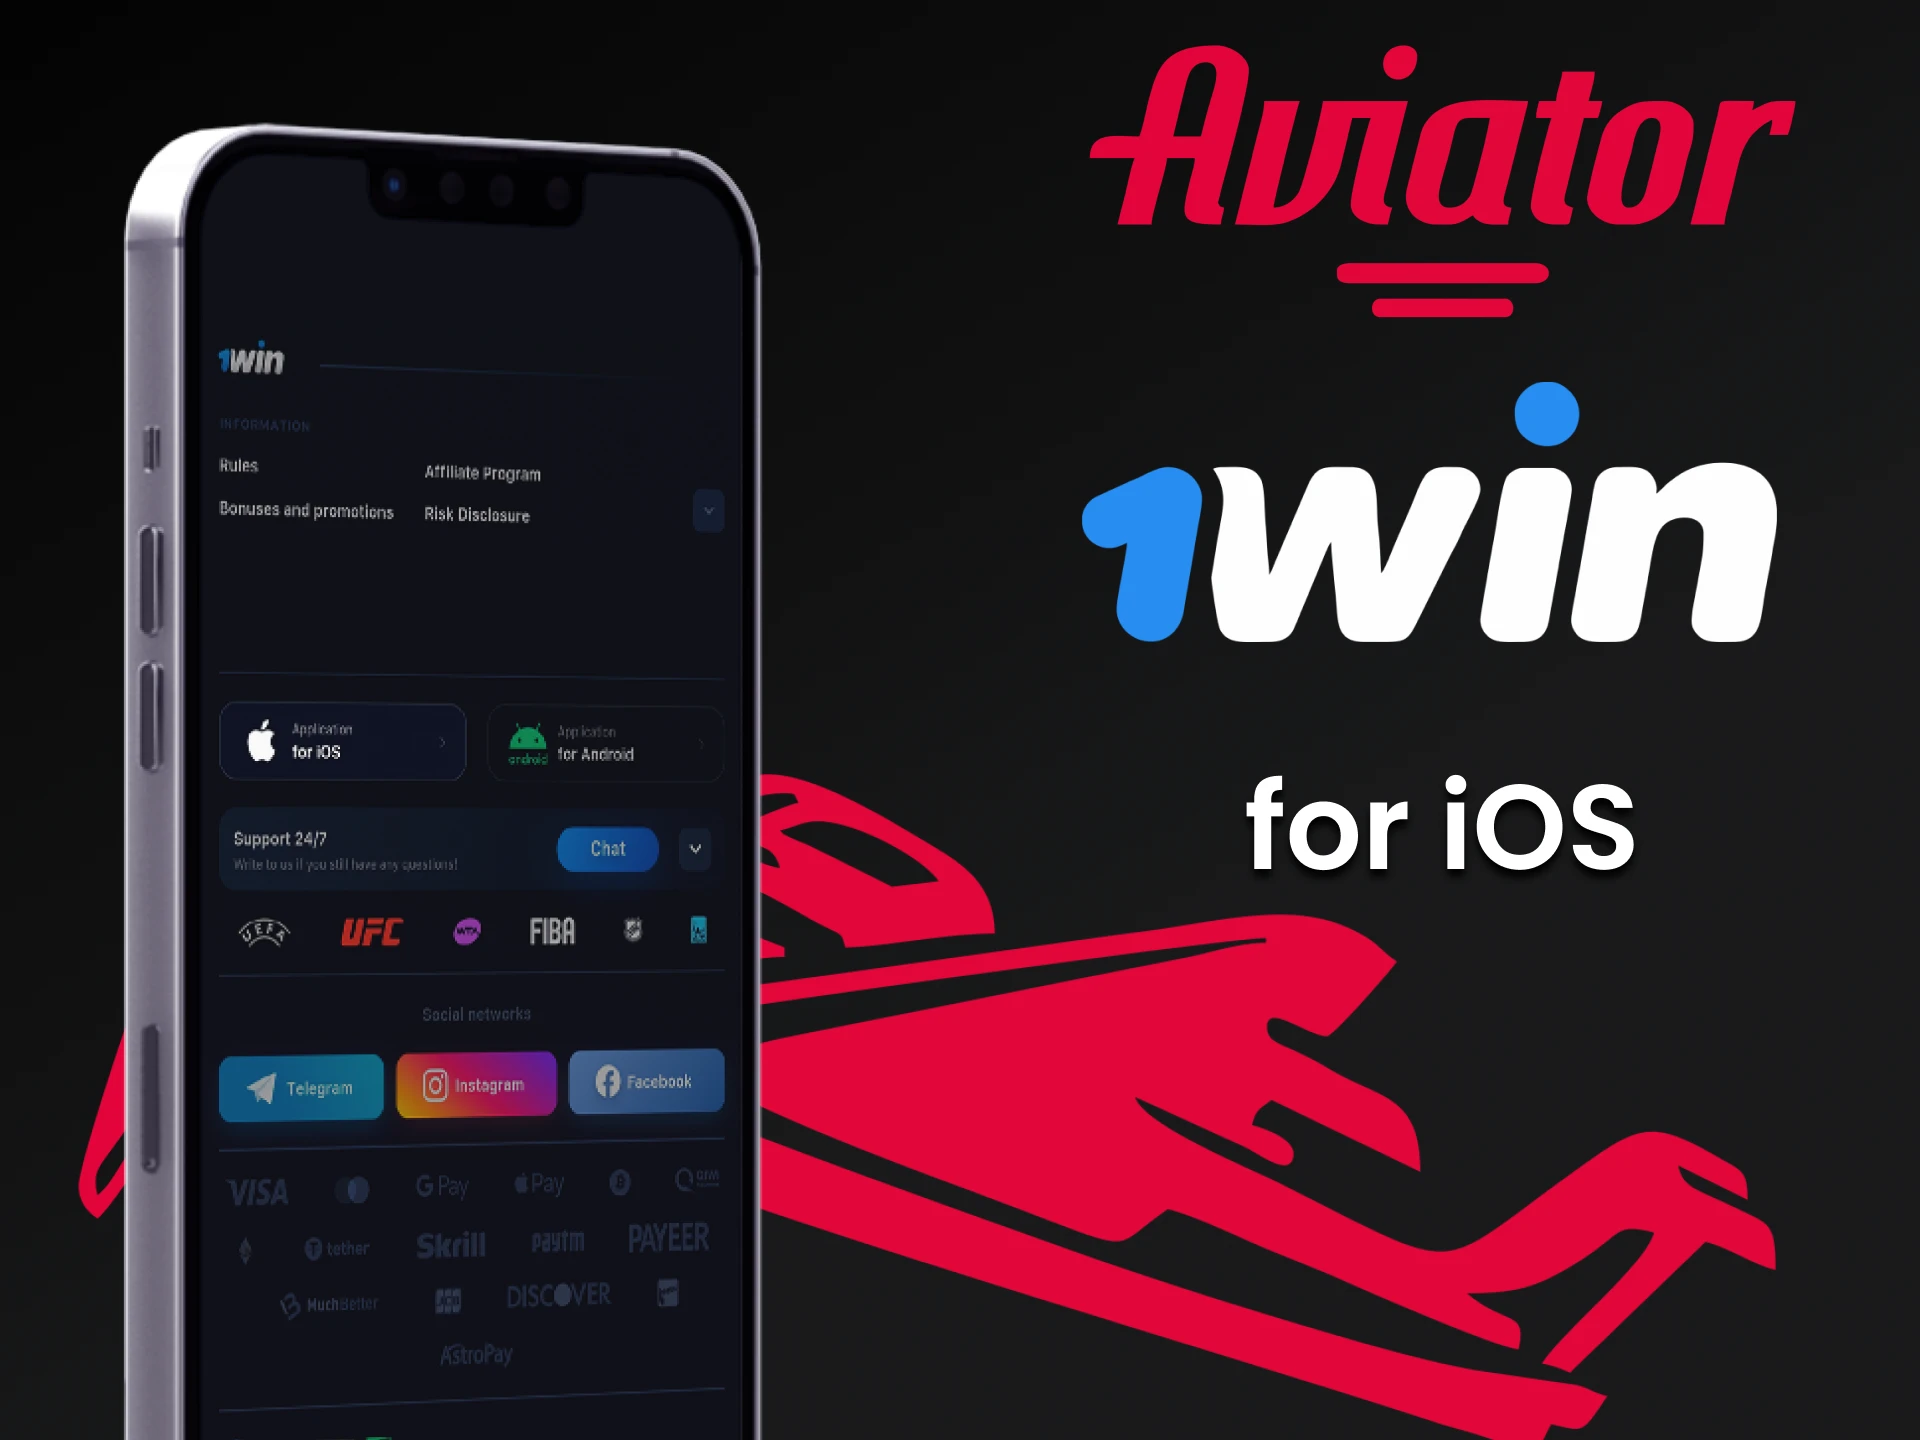 Play Aviator through the 1win iOS app.